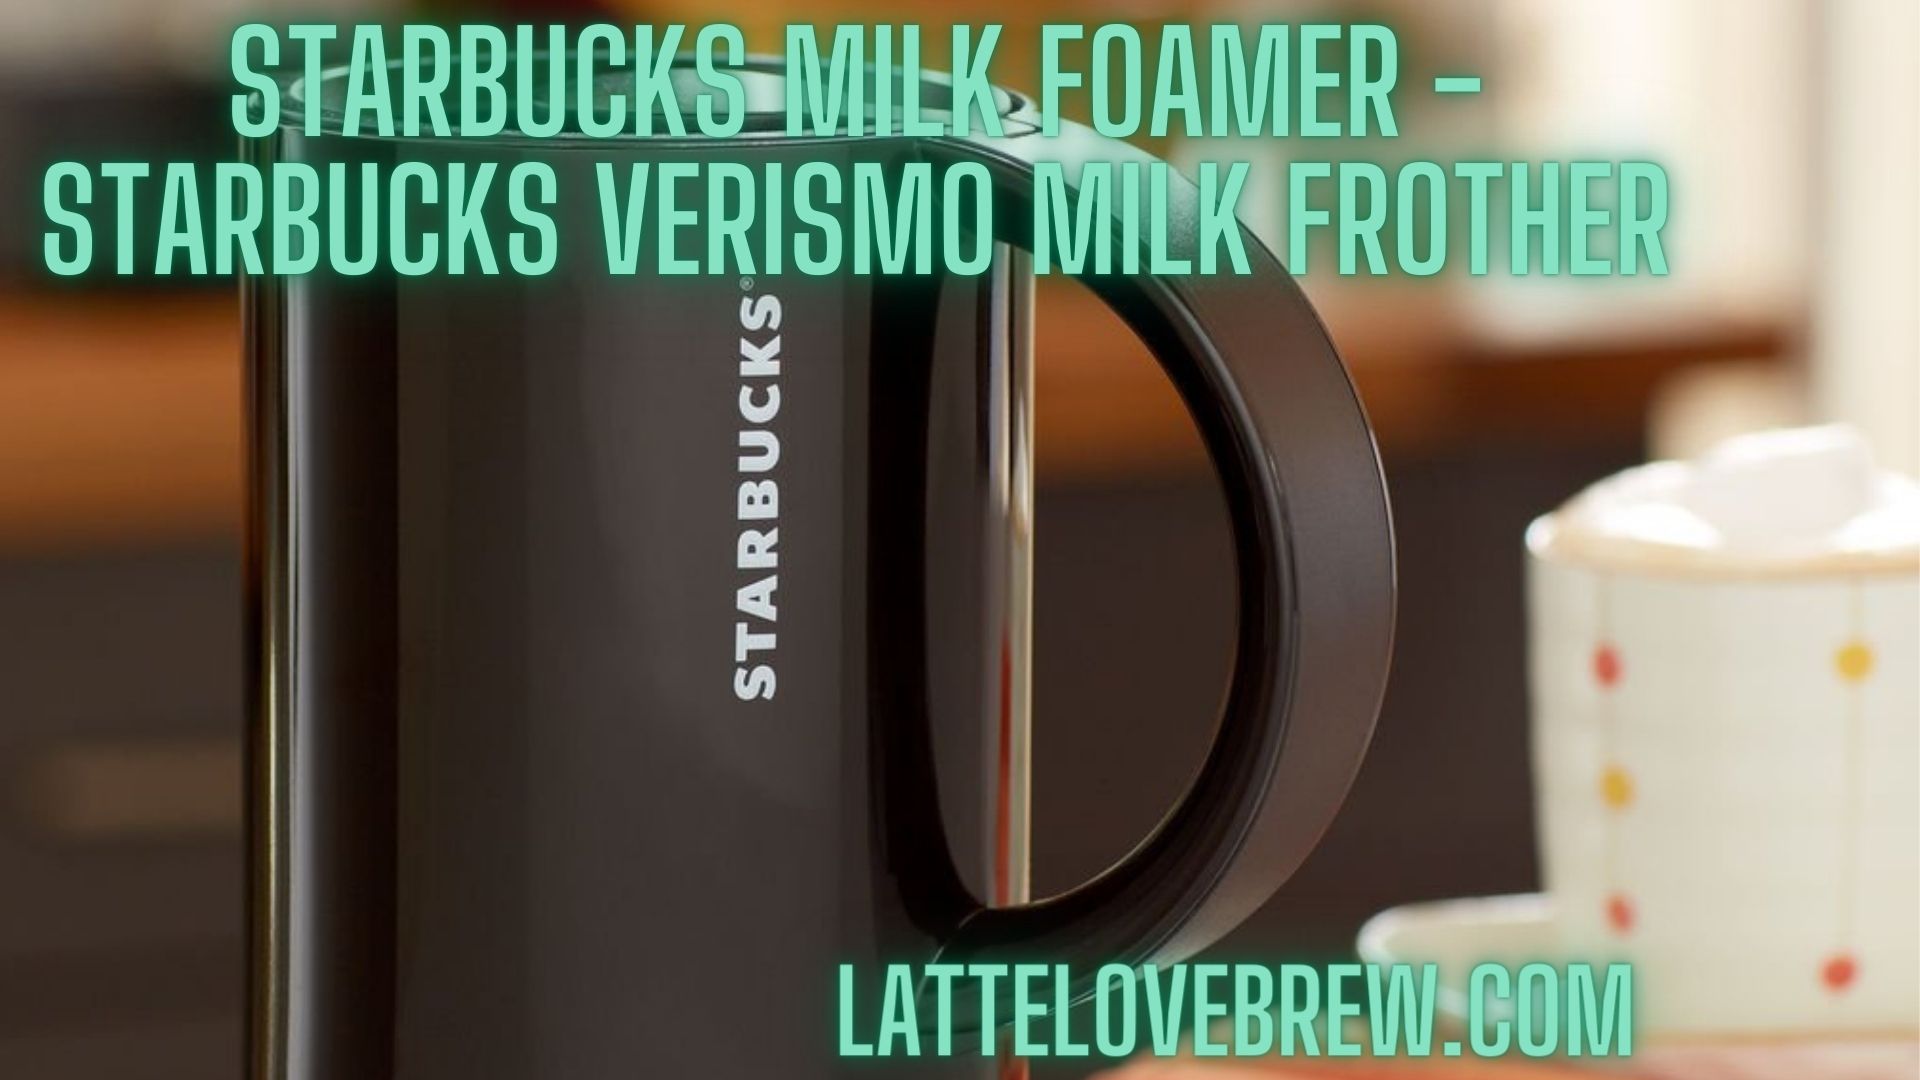 Starbucks Verismo Milk Frother Offer 